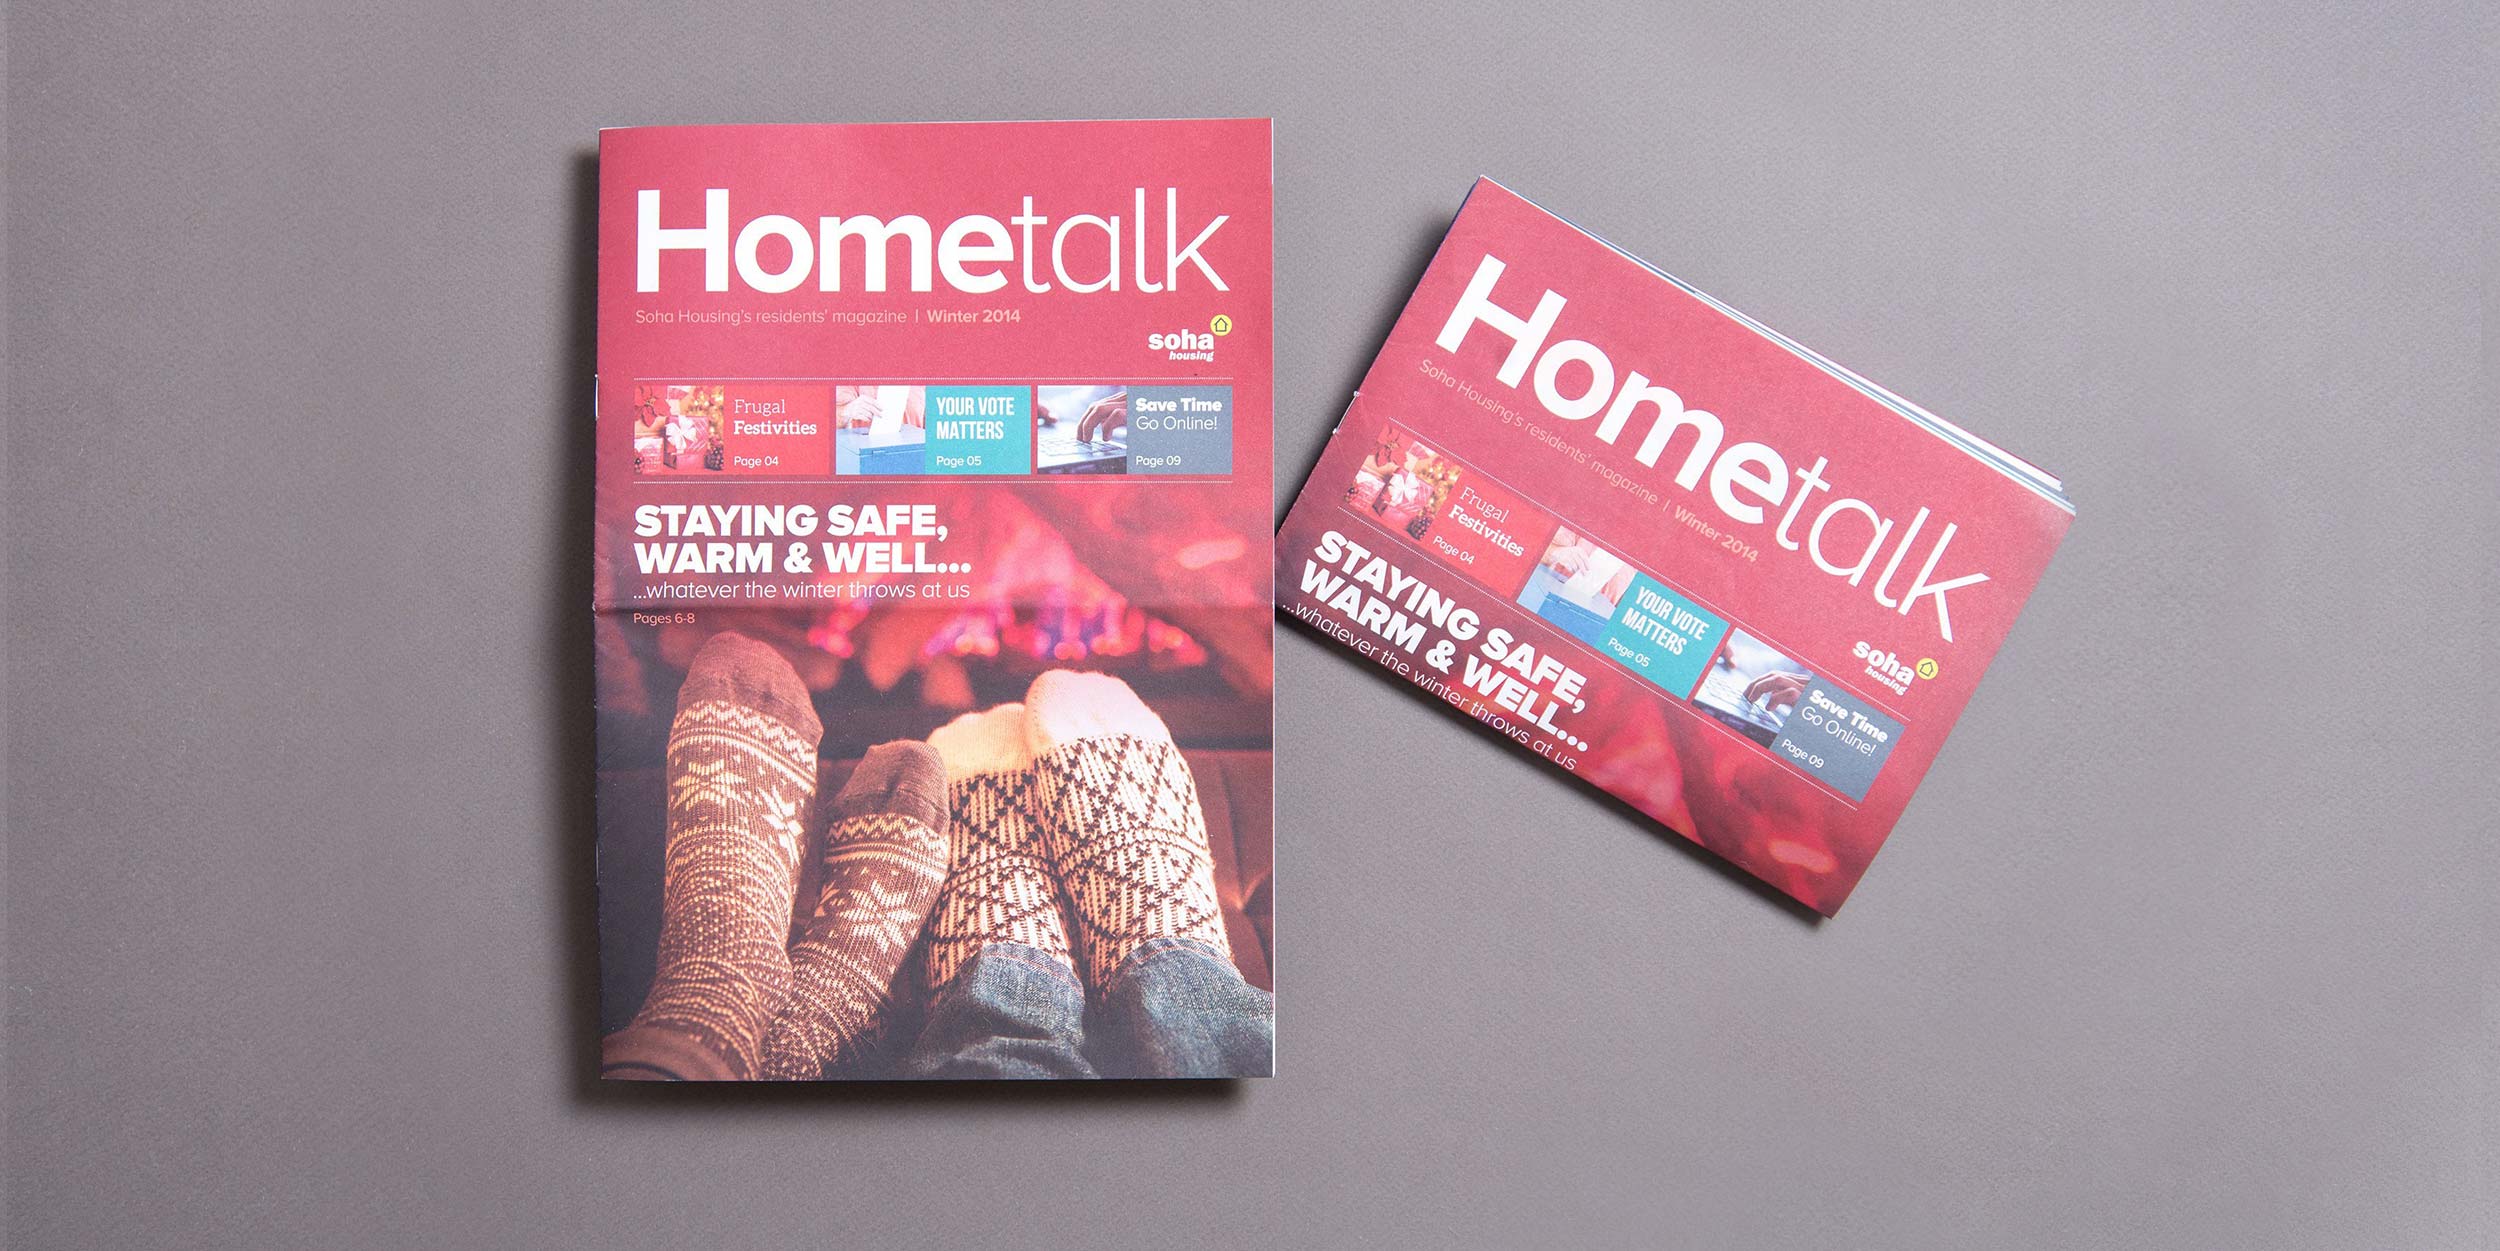 Hometalk magazine design by Toast